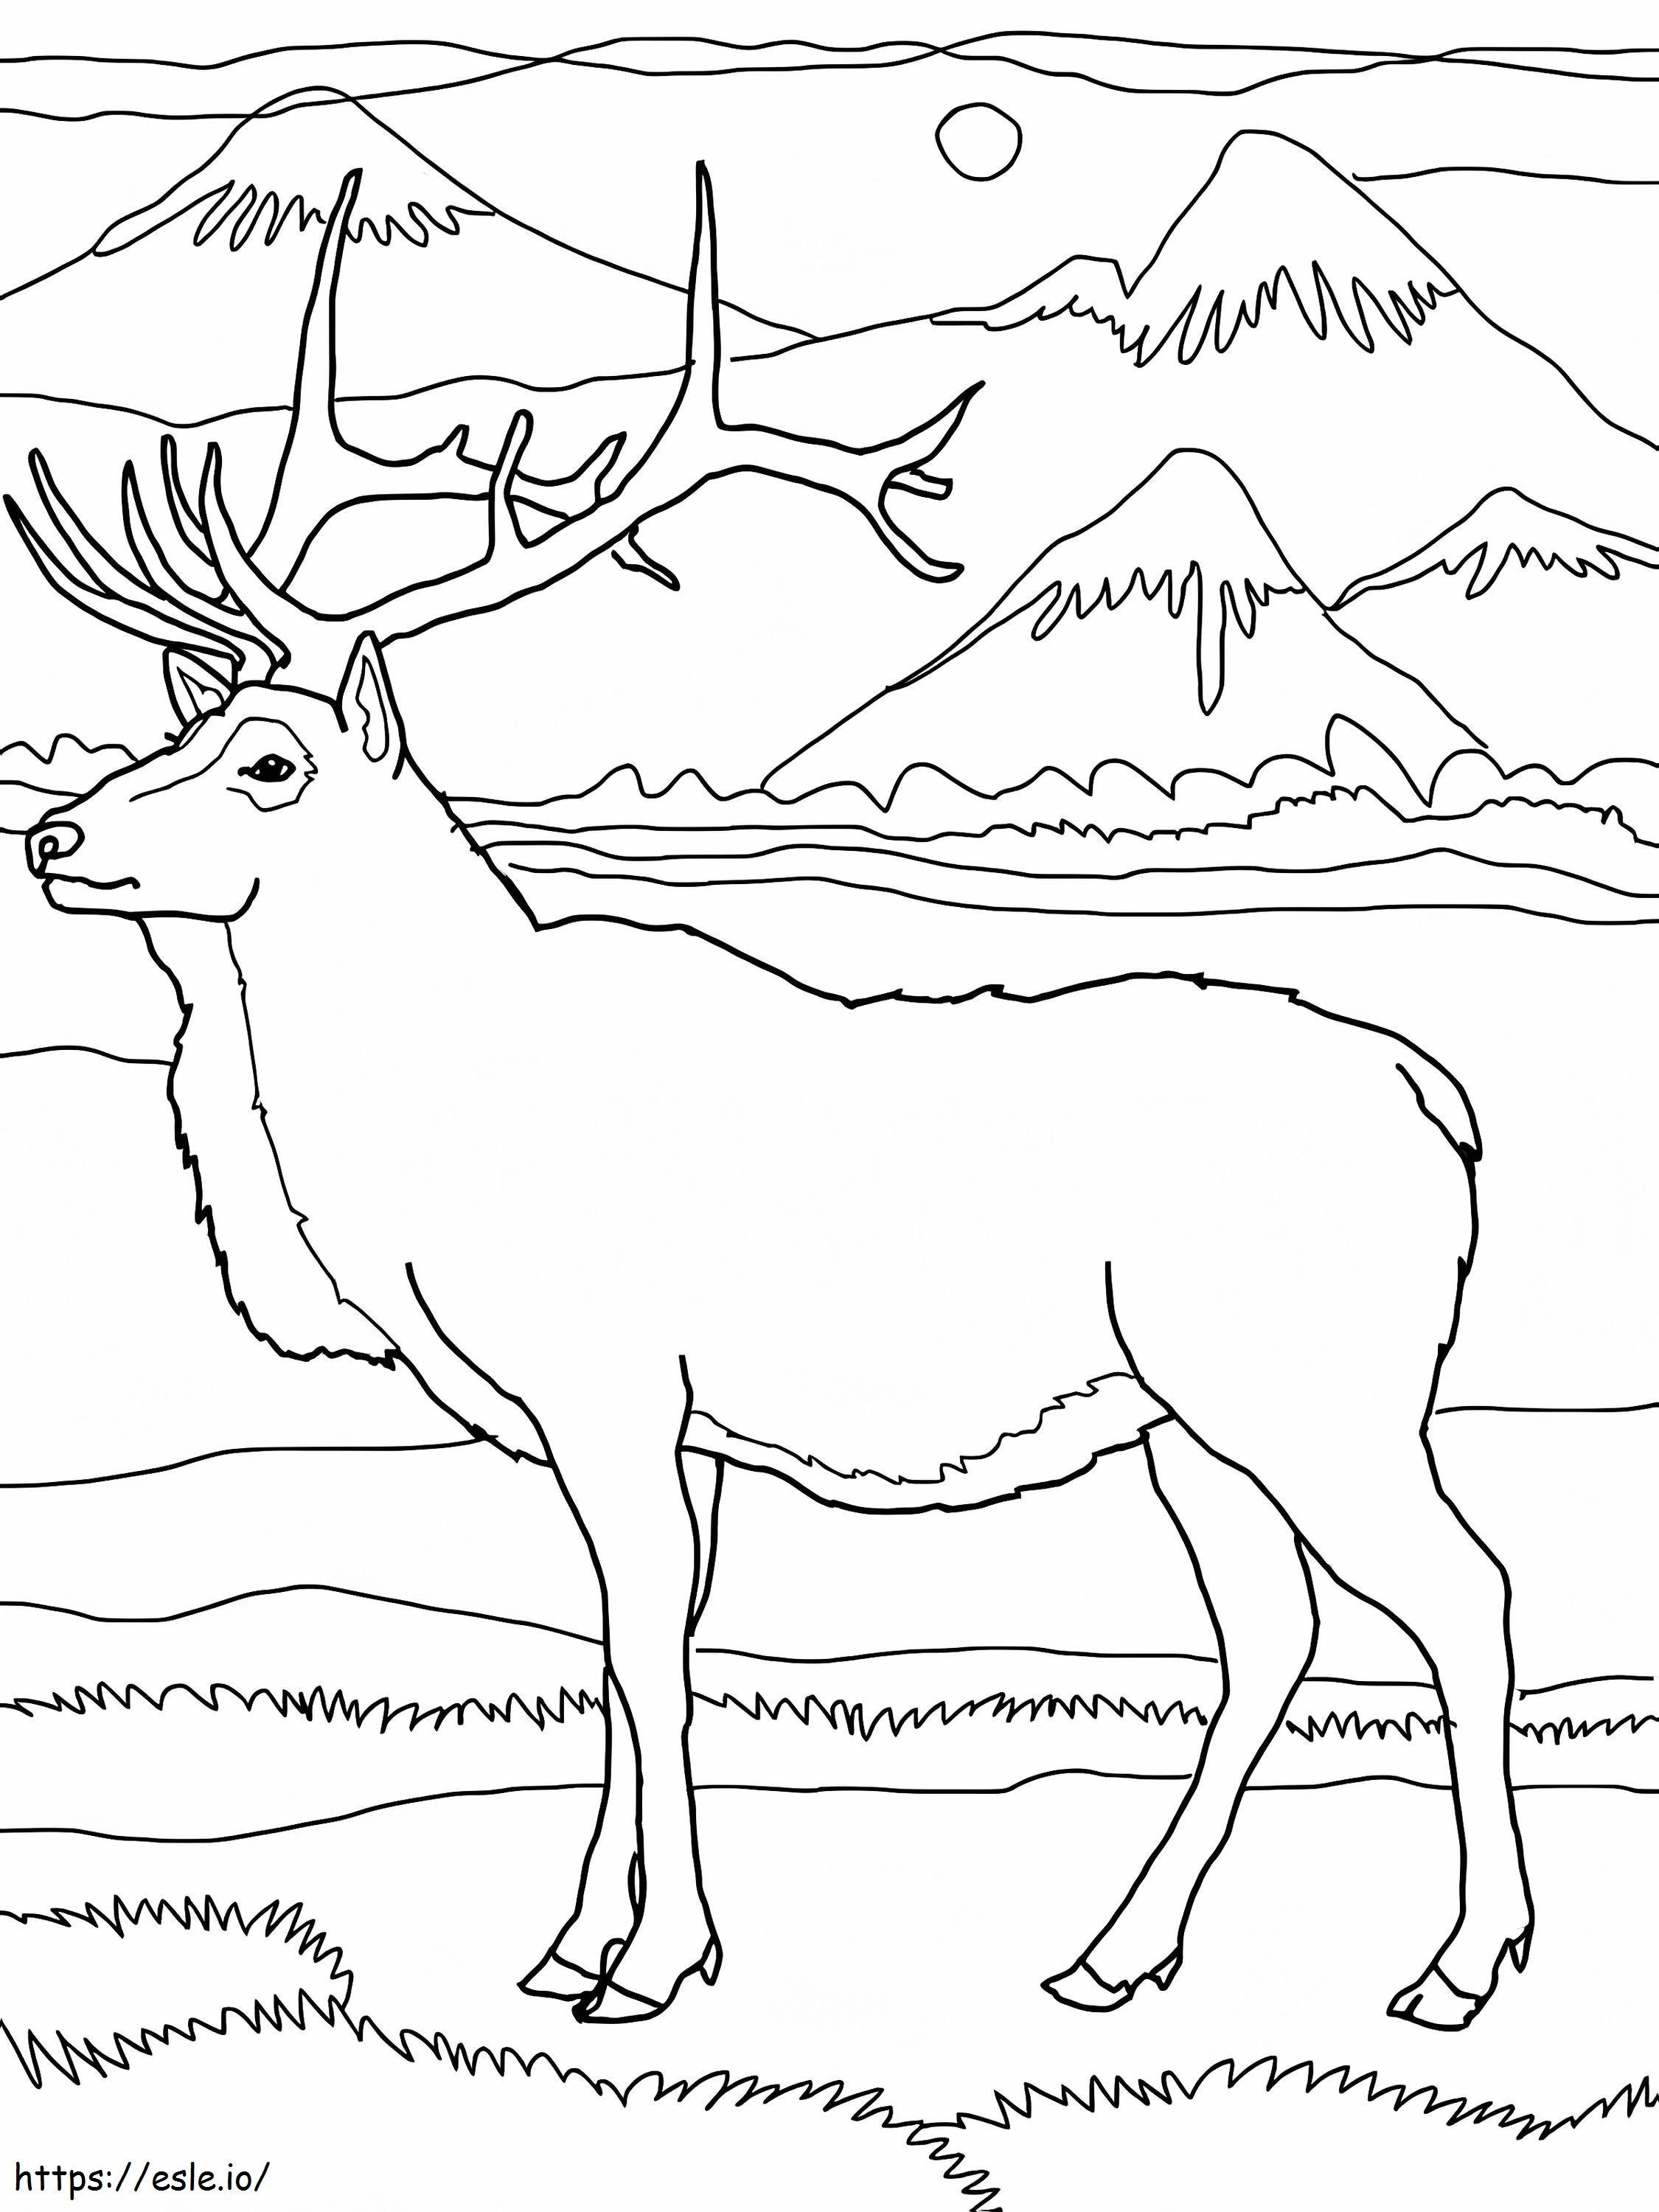 Moose Up The Mountain kifestő